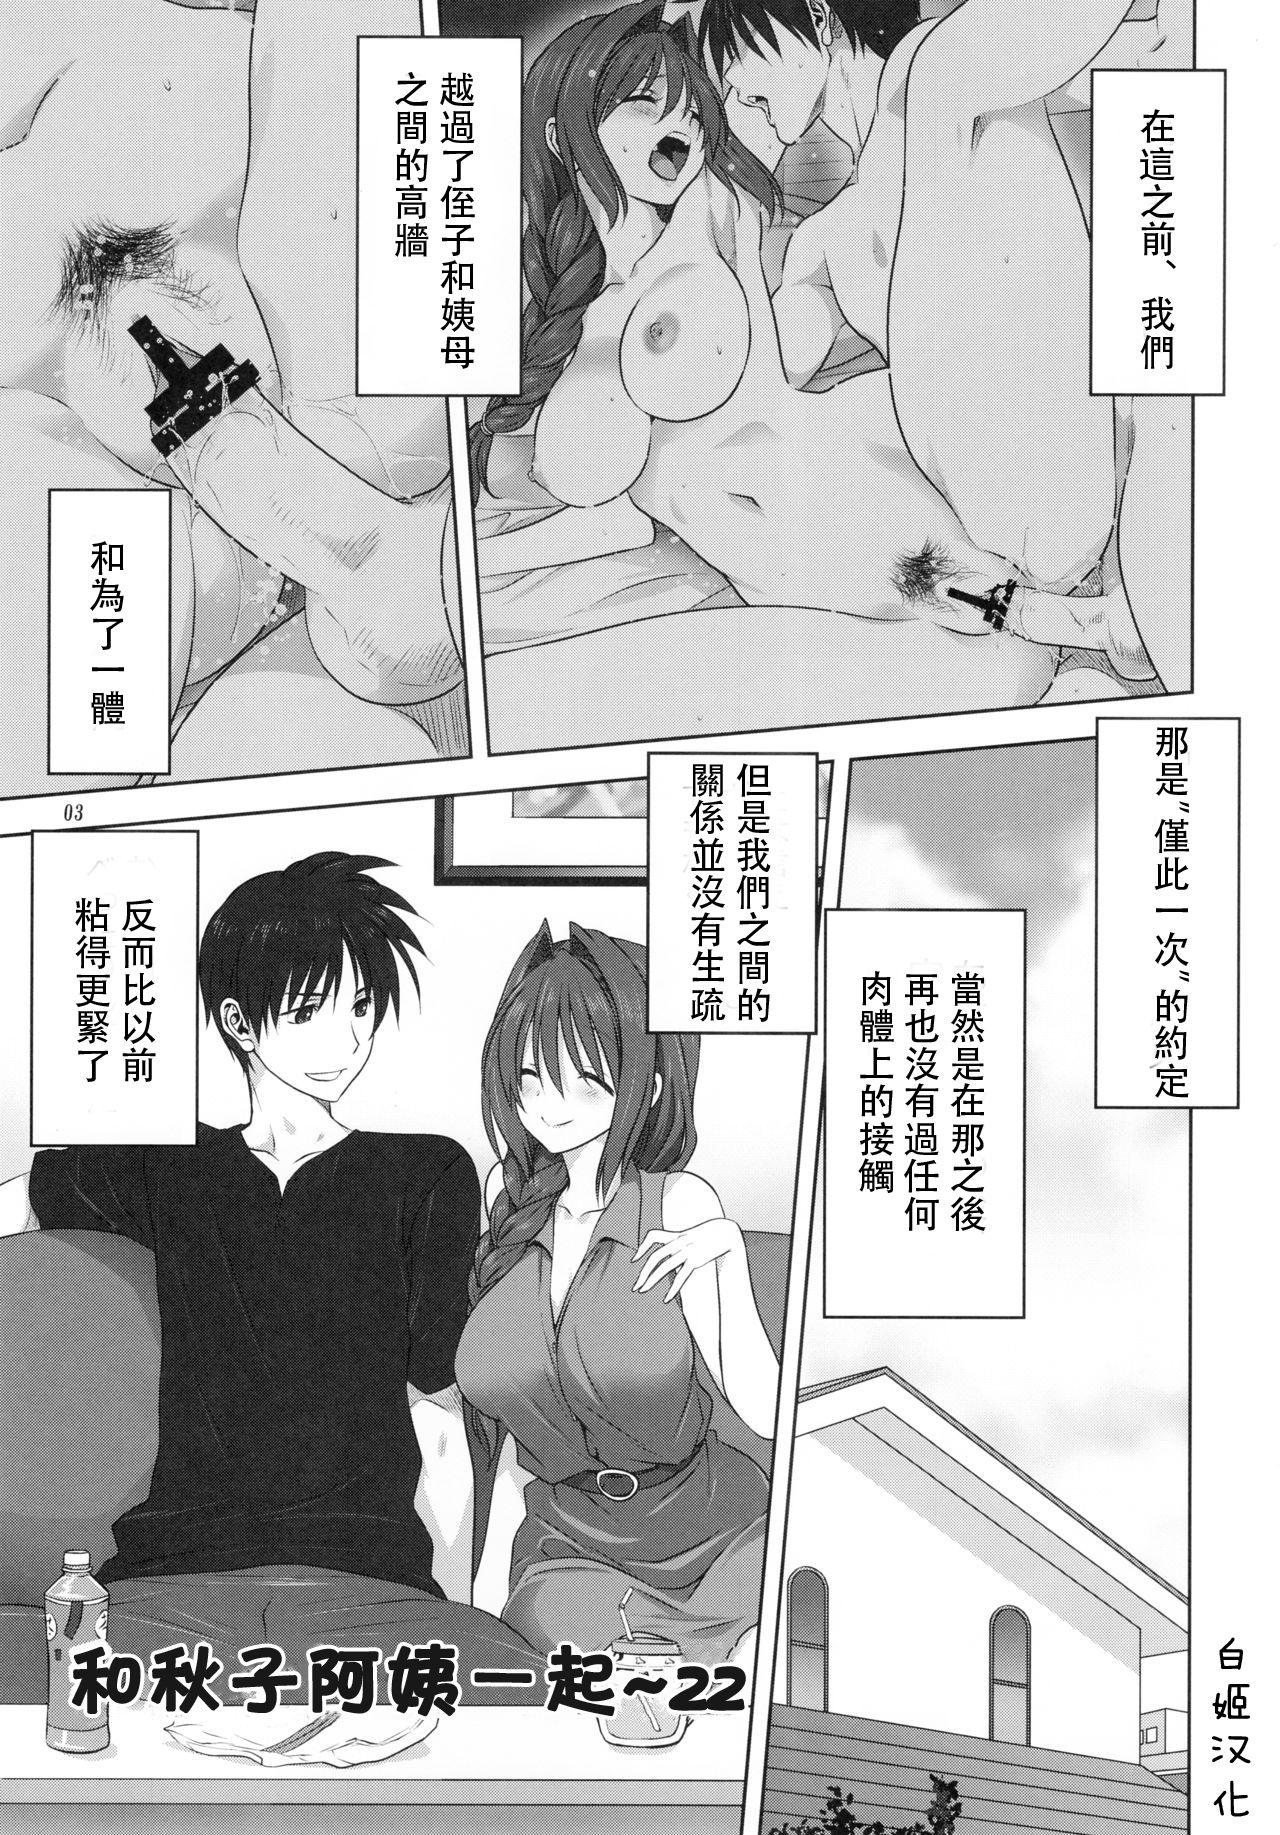 Teenager Akiko-san to Issho 22 - Kanon Woman - Page 2